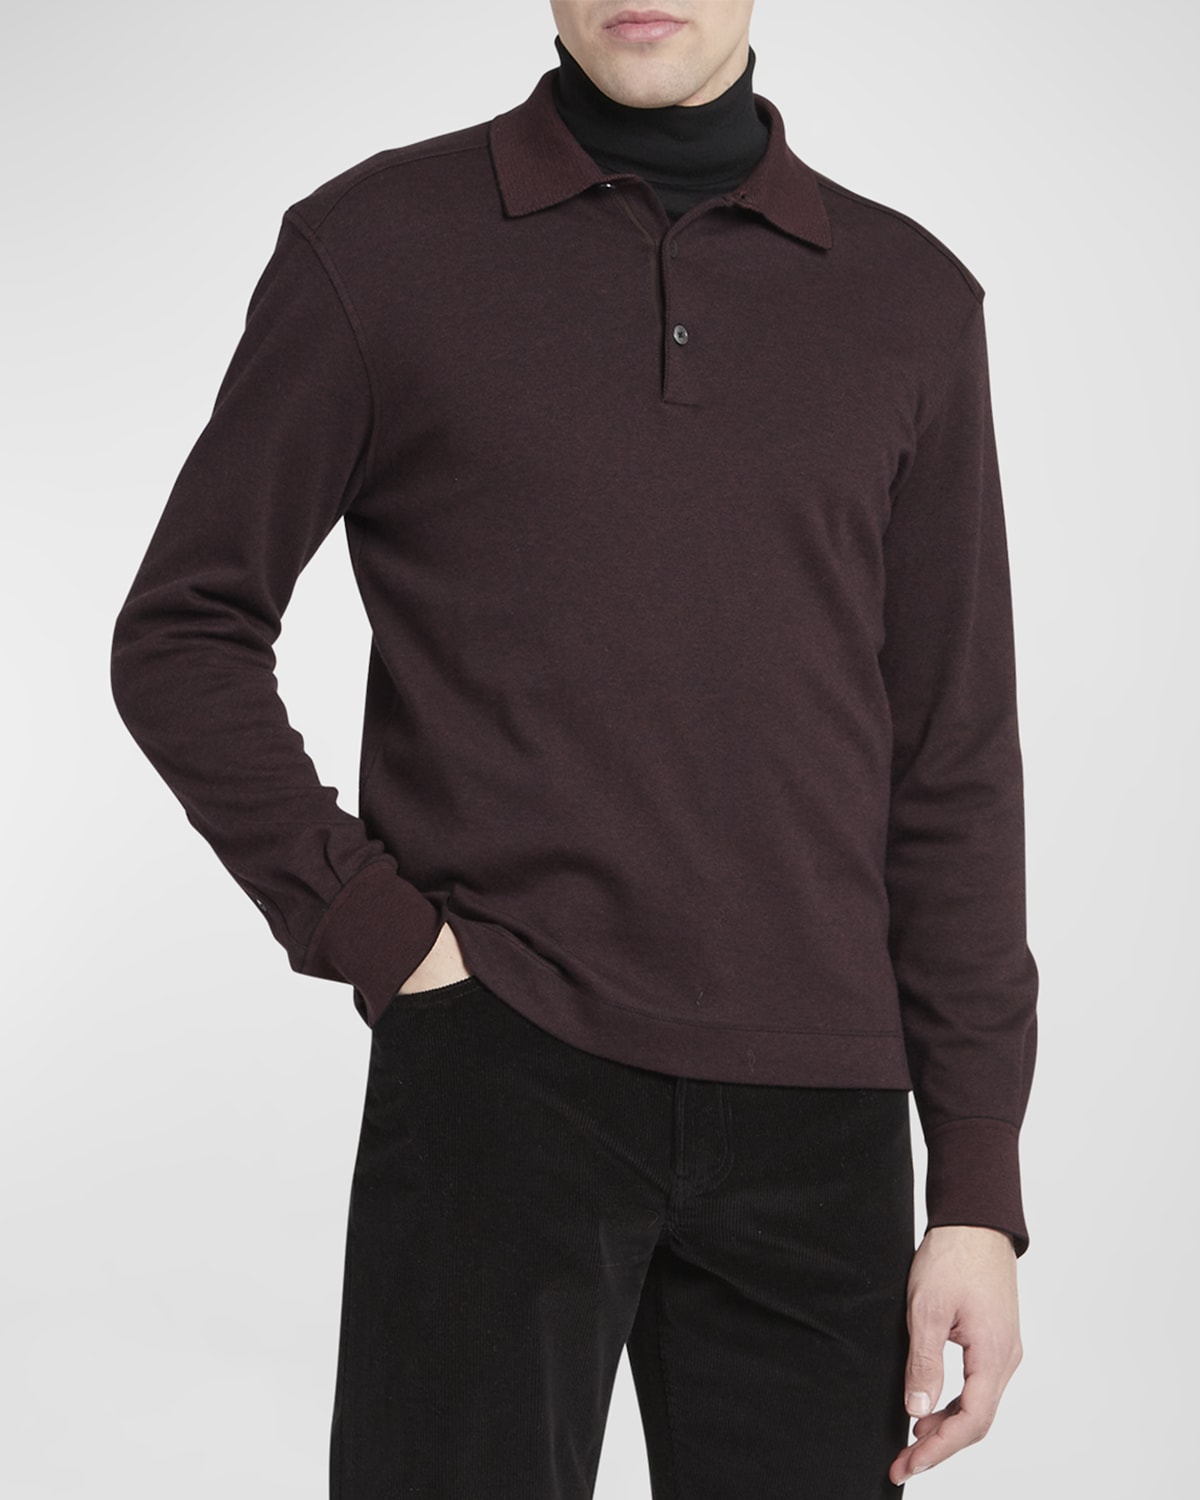 ZEGNA Men's Cotton Jacquard Polo Shirt | Neiman Marcus